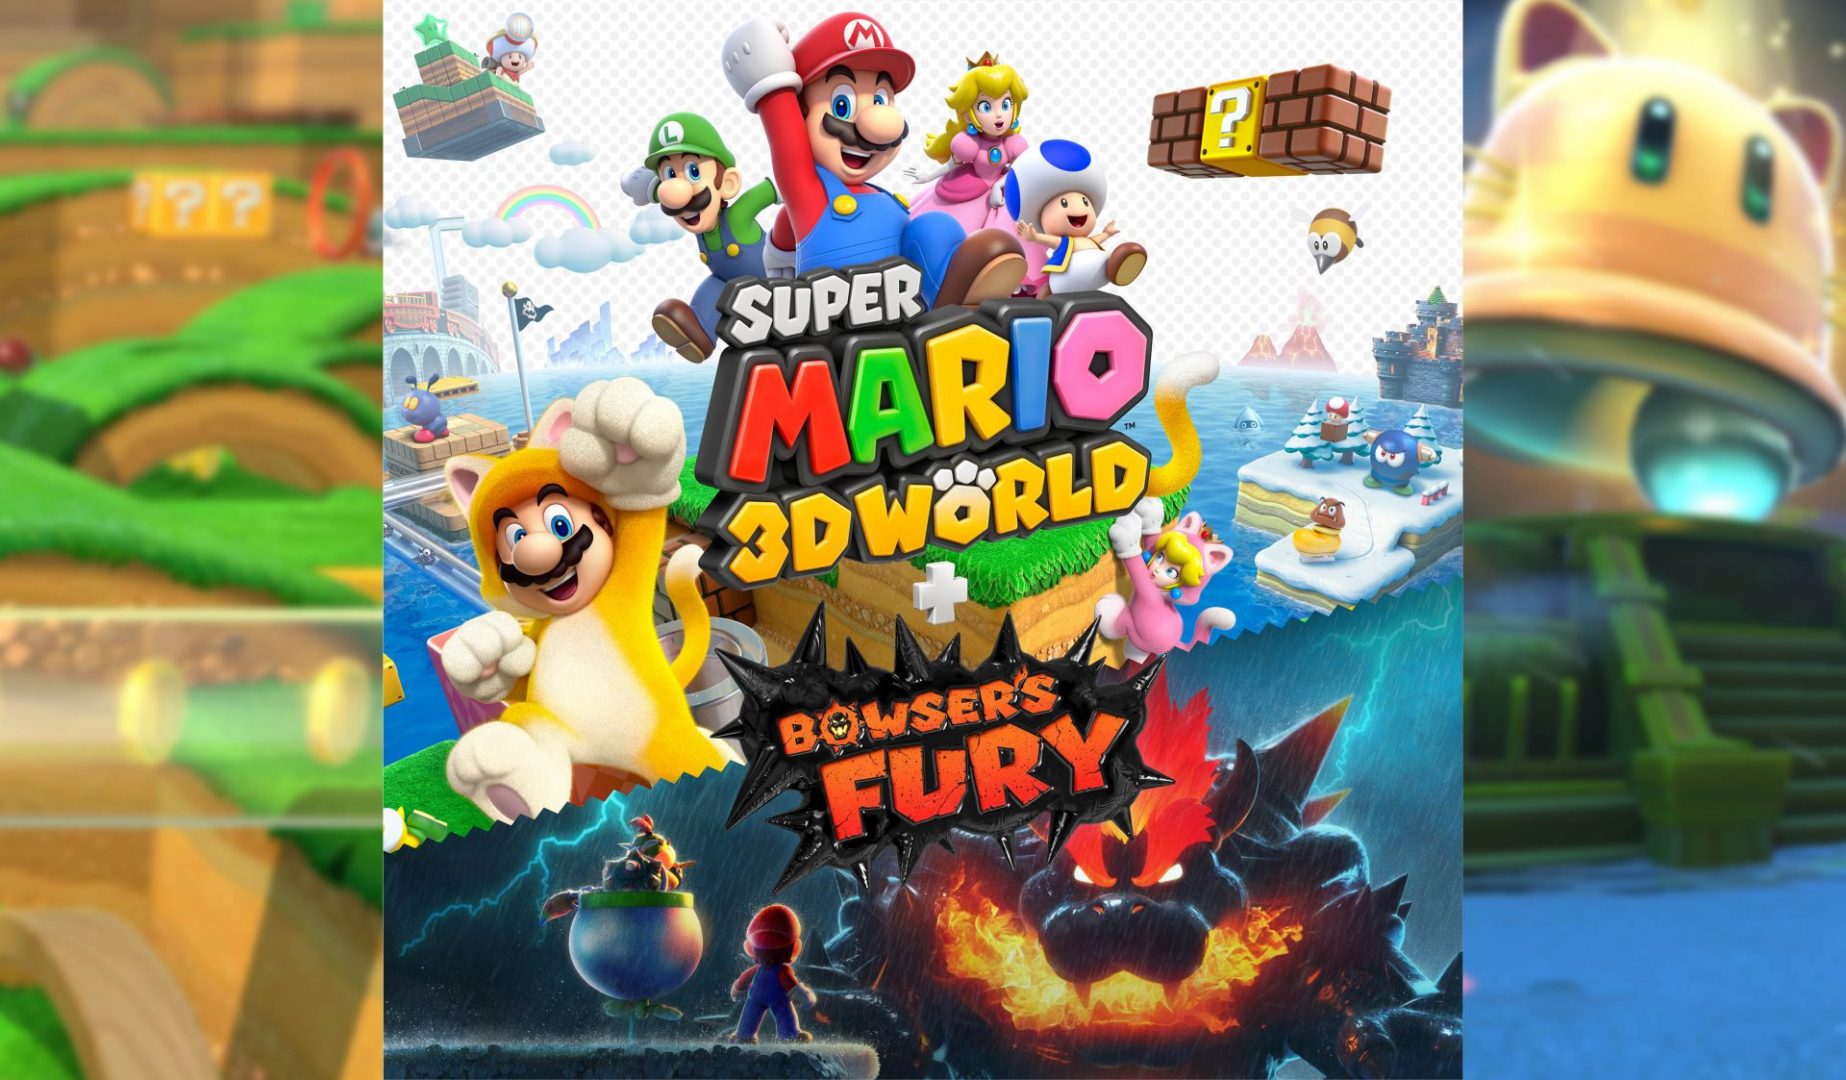 Super Mario 3d world + Bowsers Fury - Ainda Vale a Pena Comprar